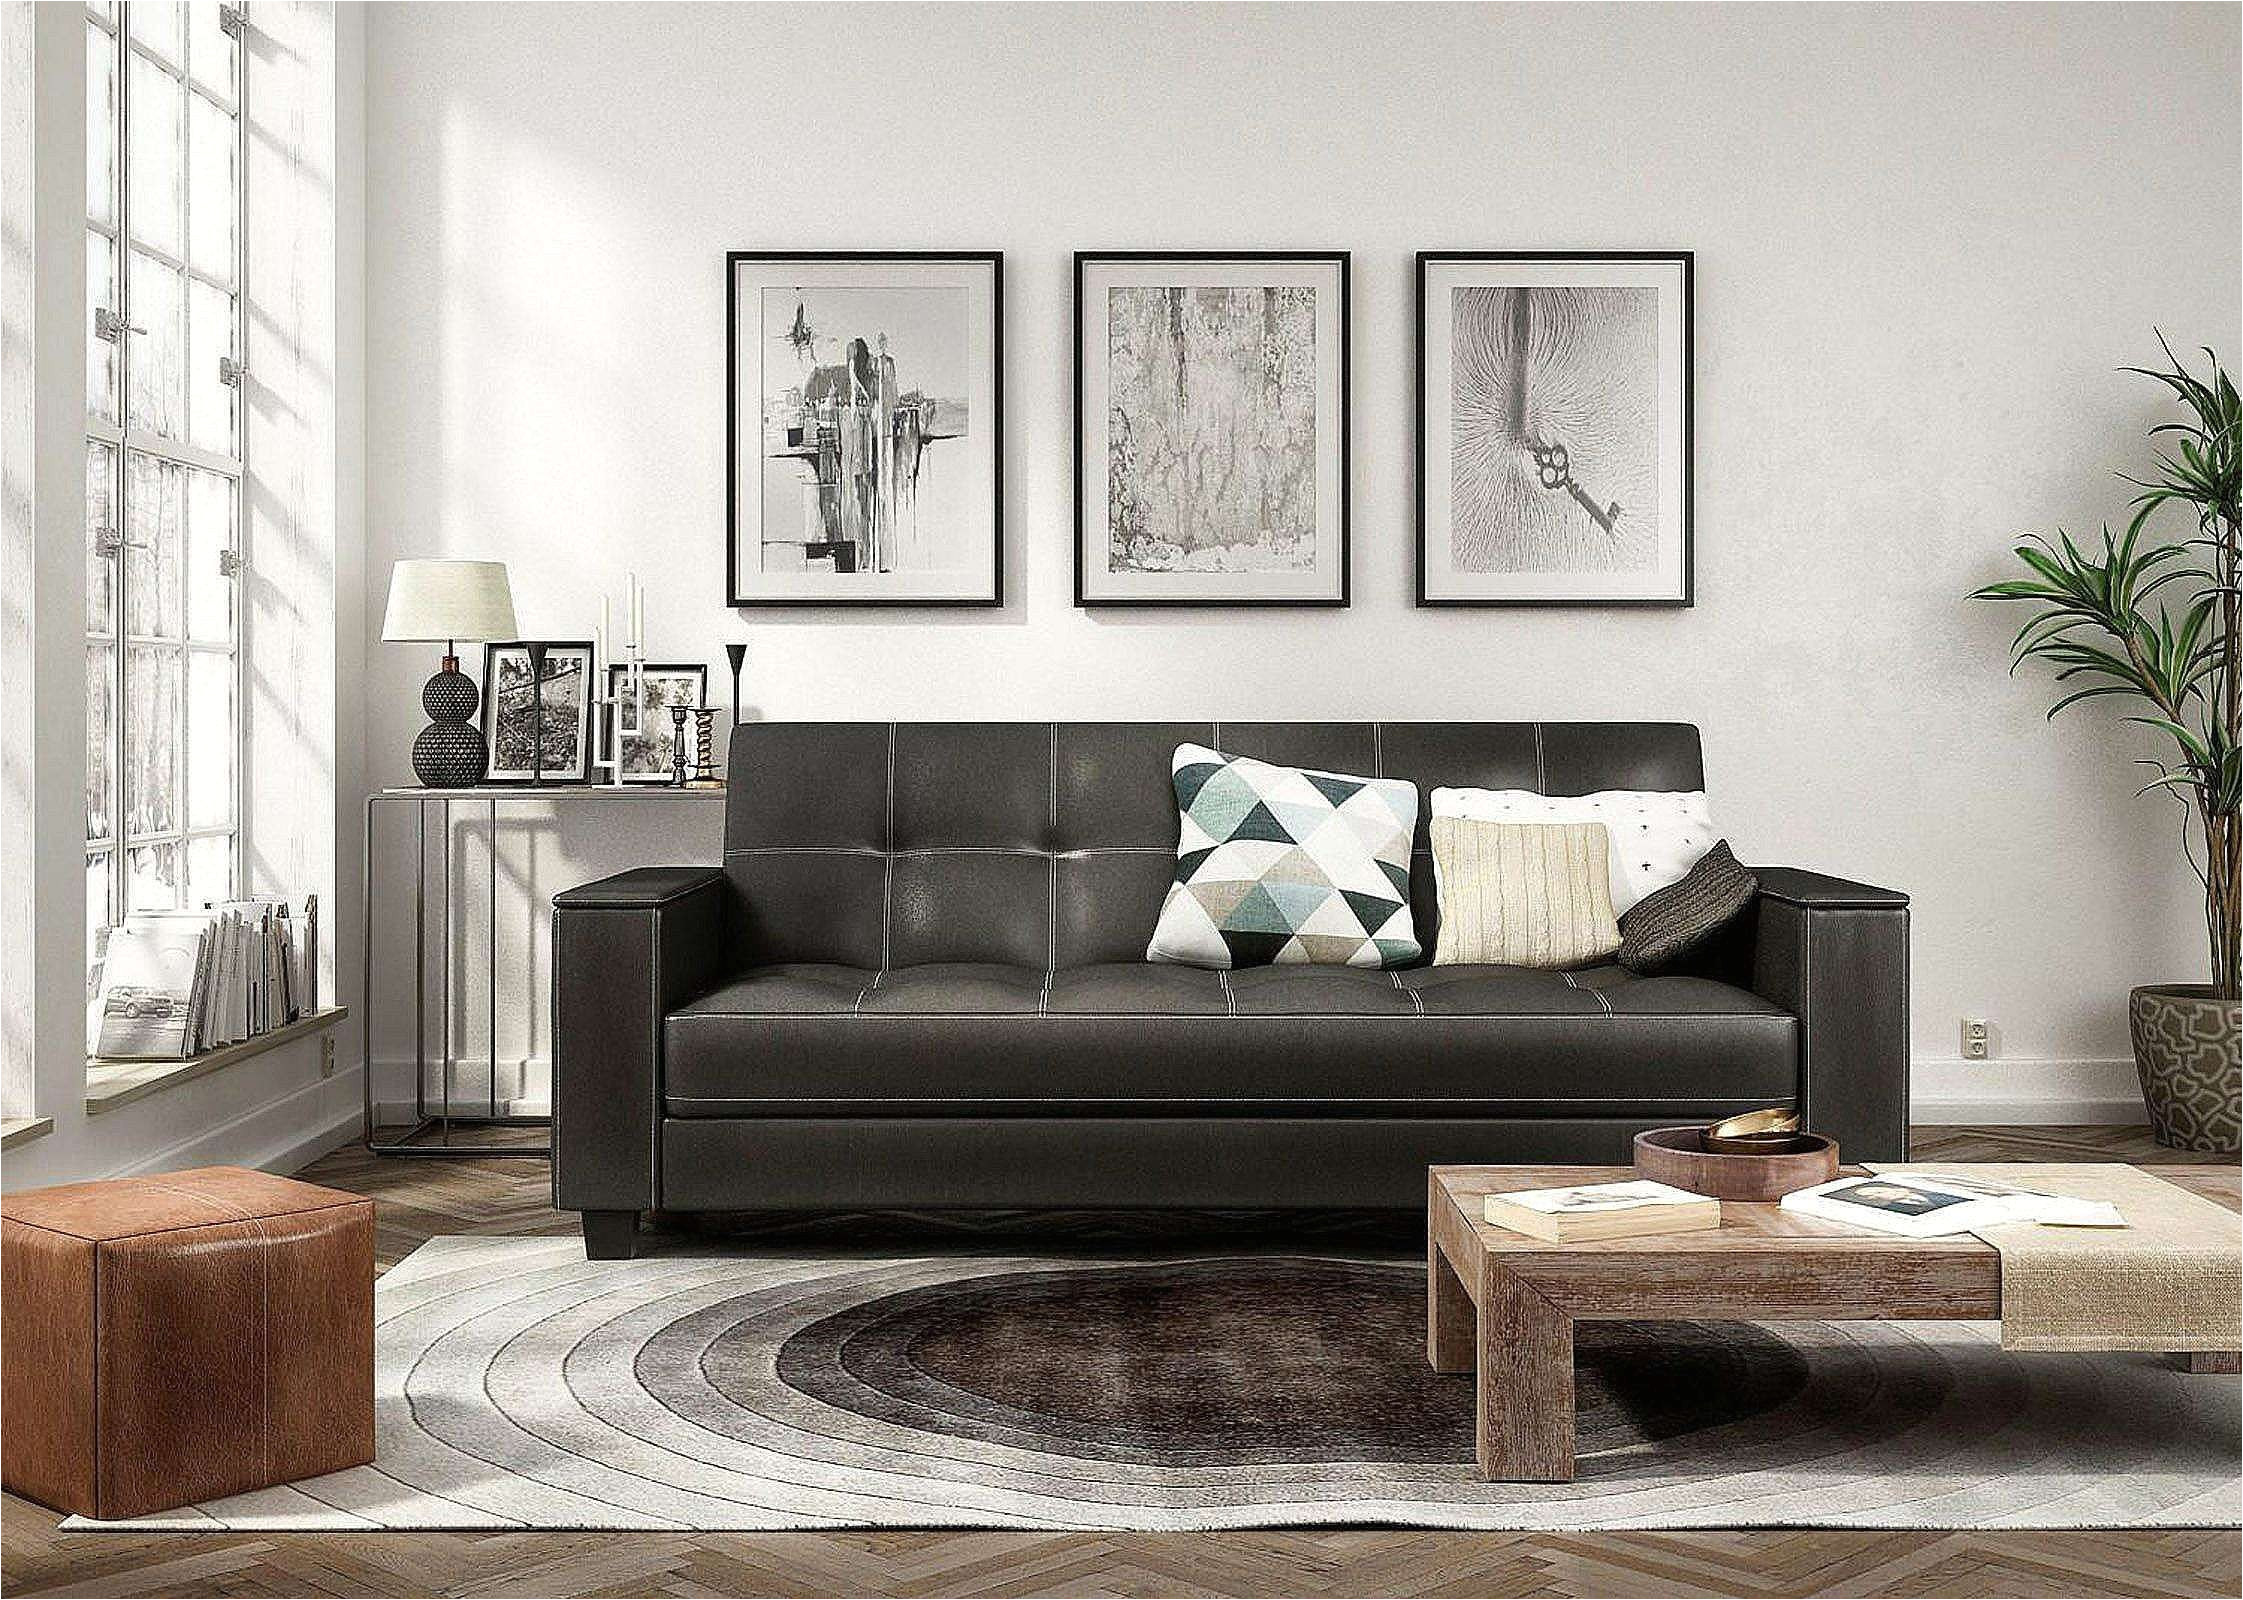 trendy dining room ideas lovely modern living room furniture new gunstige sofa macys furniture 0d